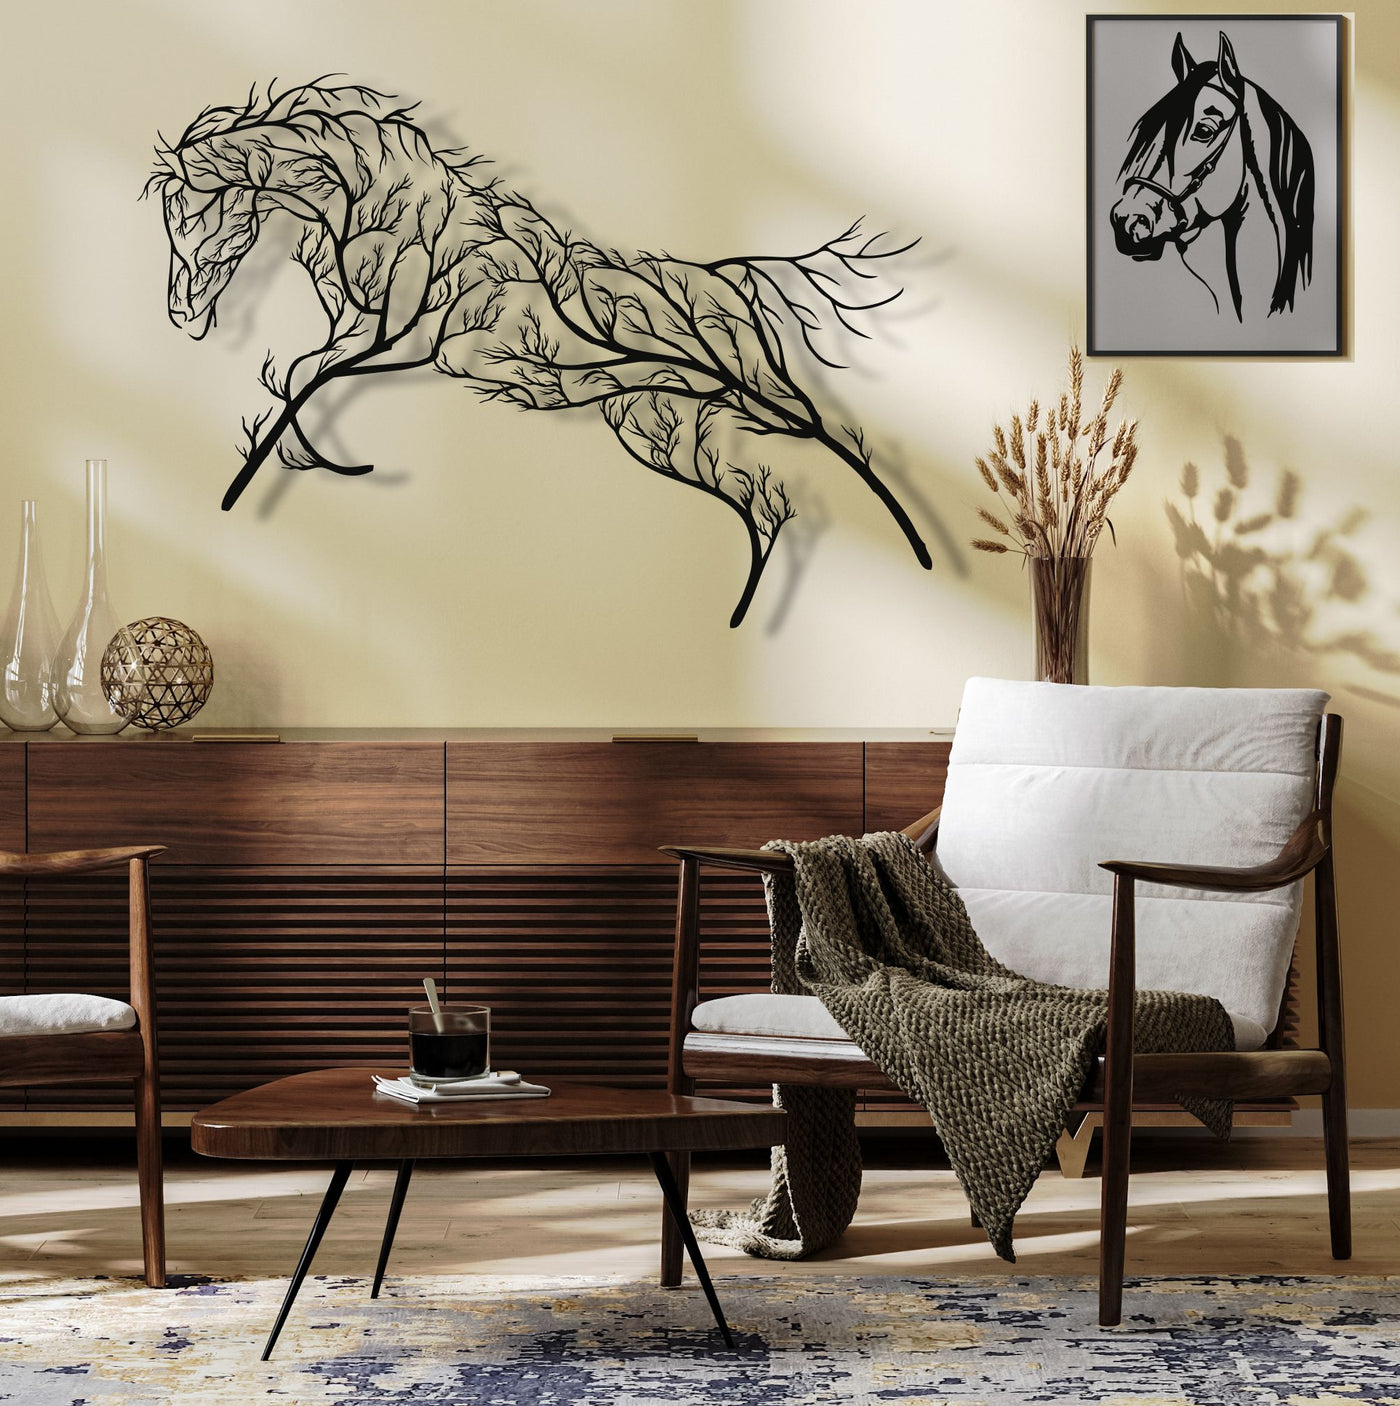 Tree Horse Metal Wall Art